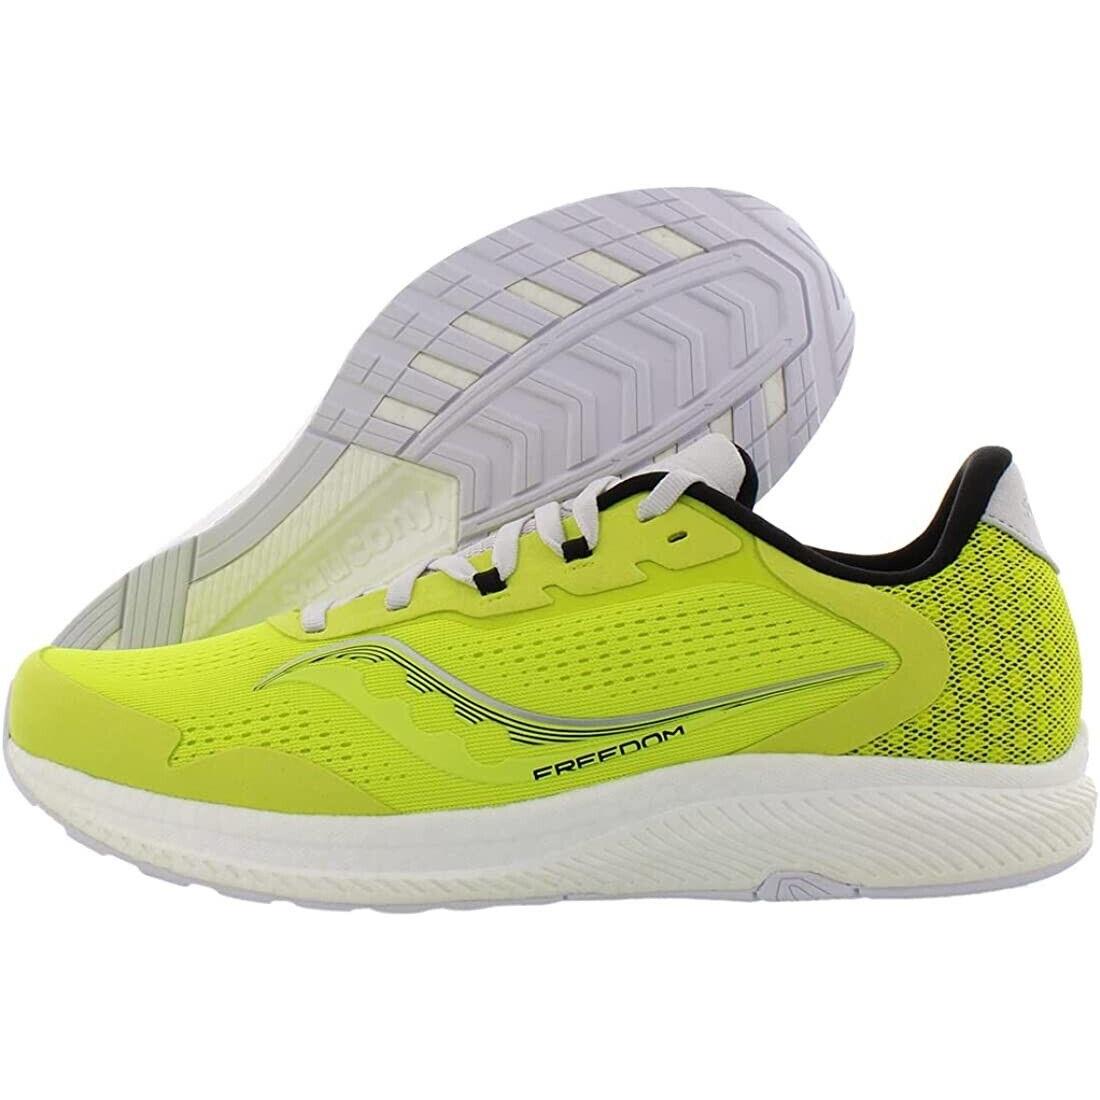 Saucony Men`s S20617-55 Freedom 4 Running Sneaker Shoes Citrus/fog Size 14 M US